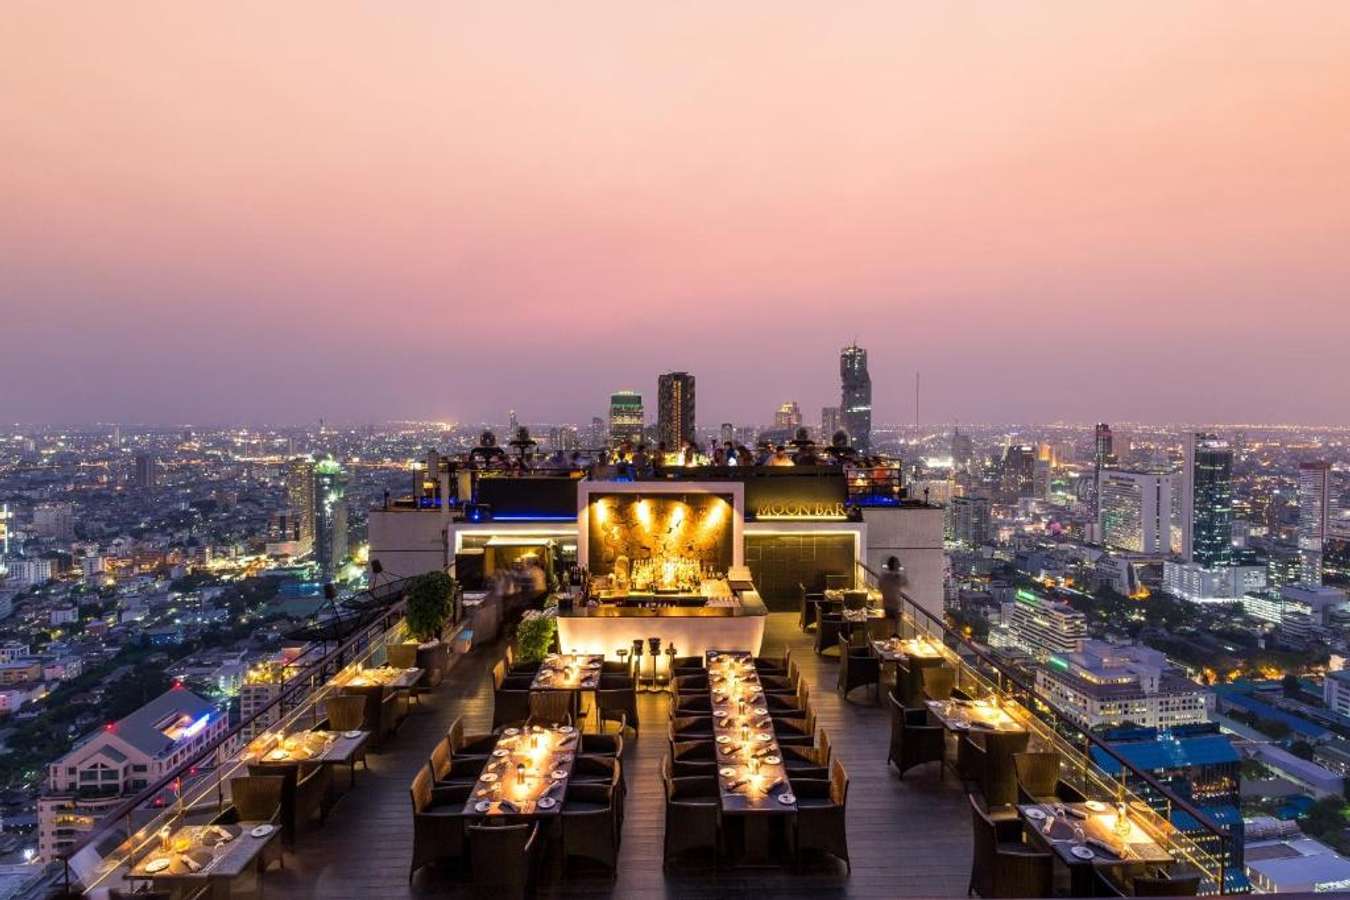 Banyan Tree Bangkok - Best Hotel in Bangkok